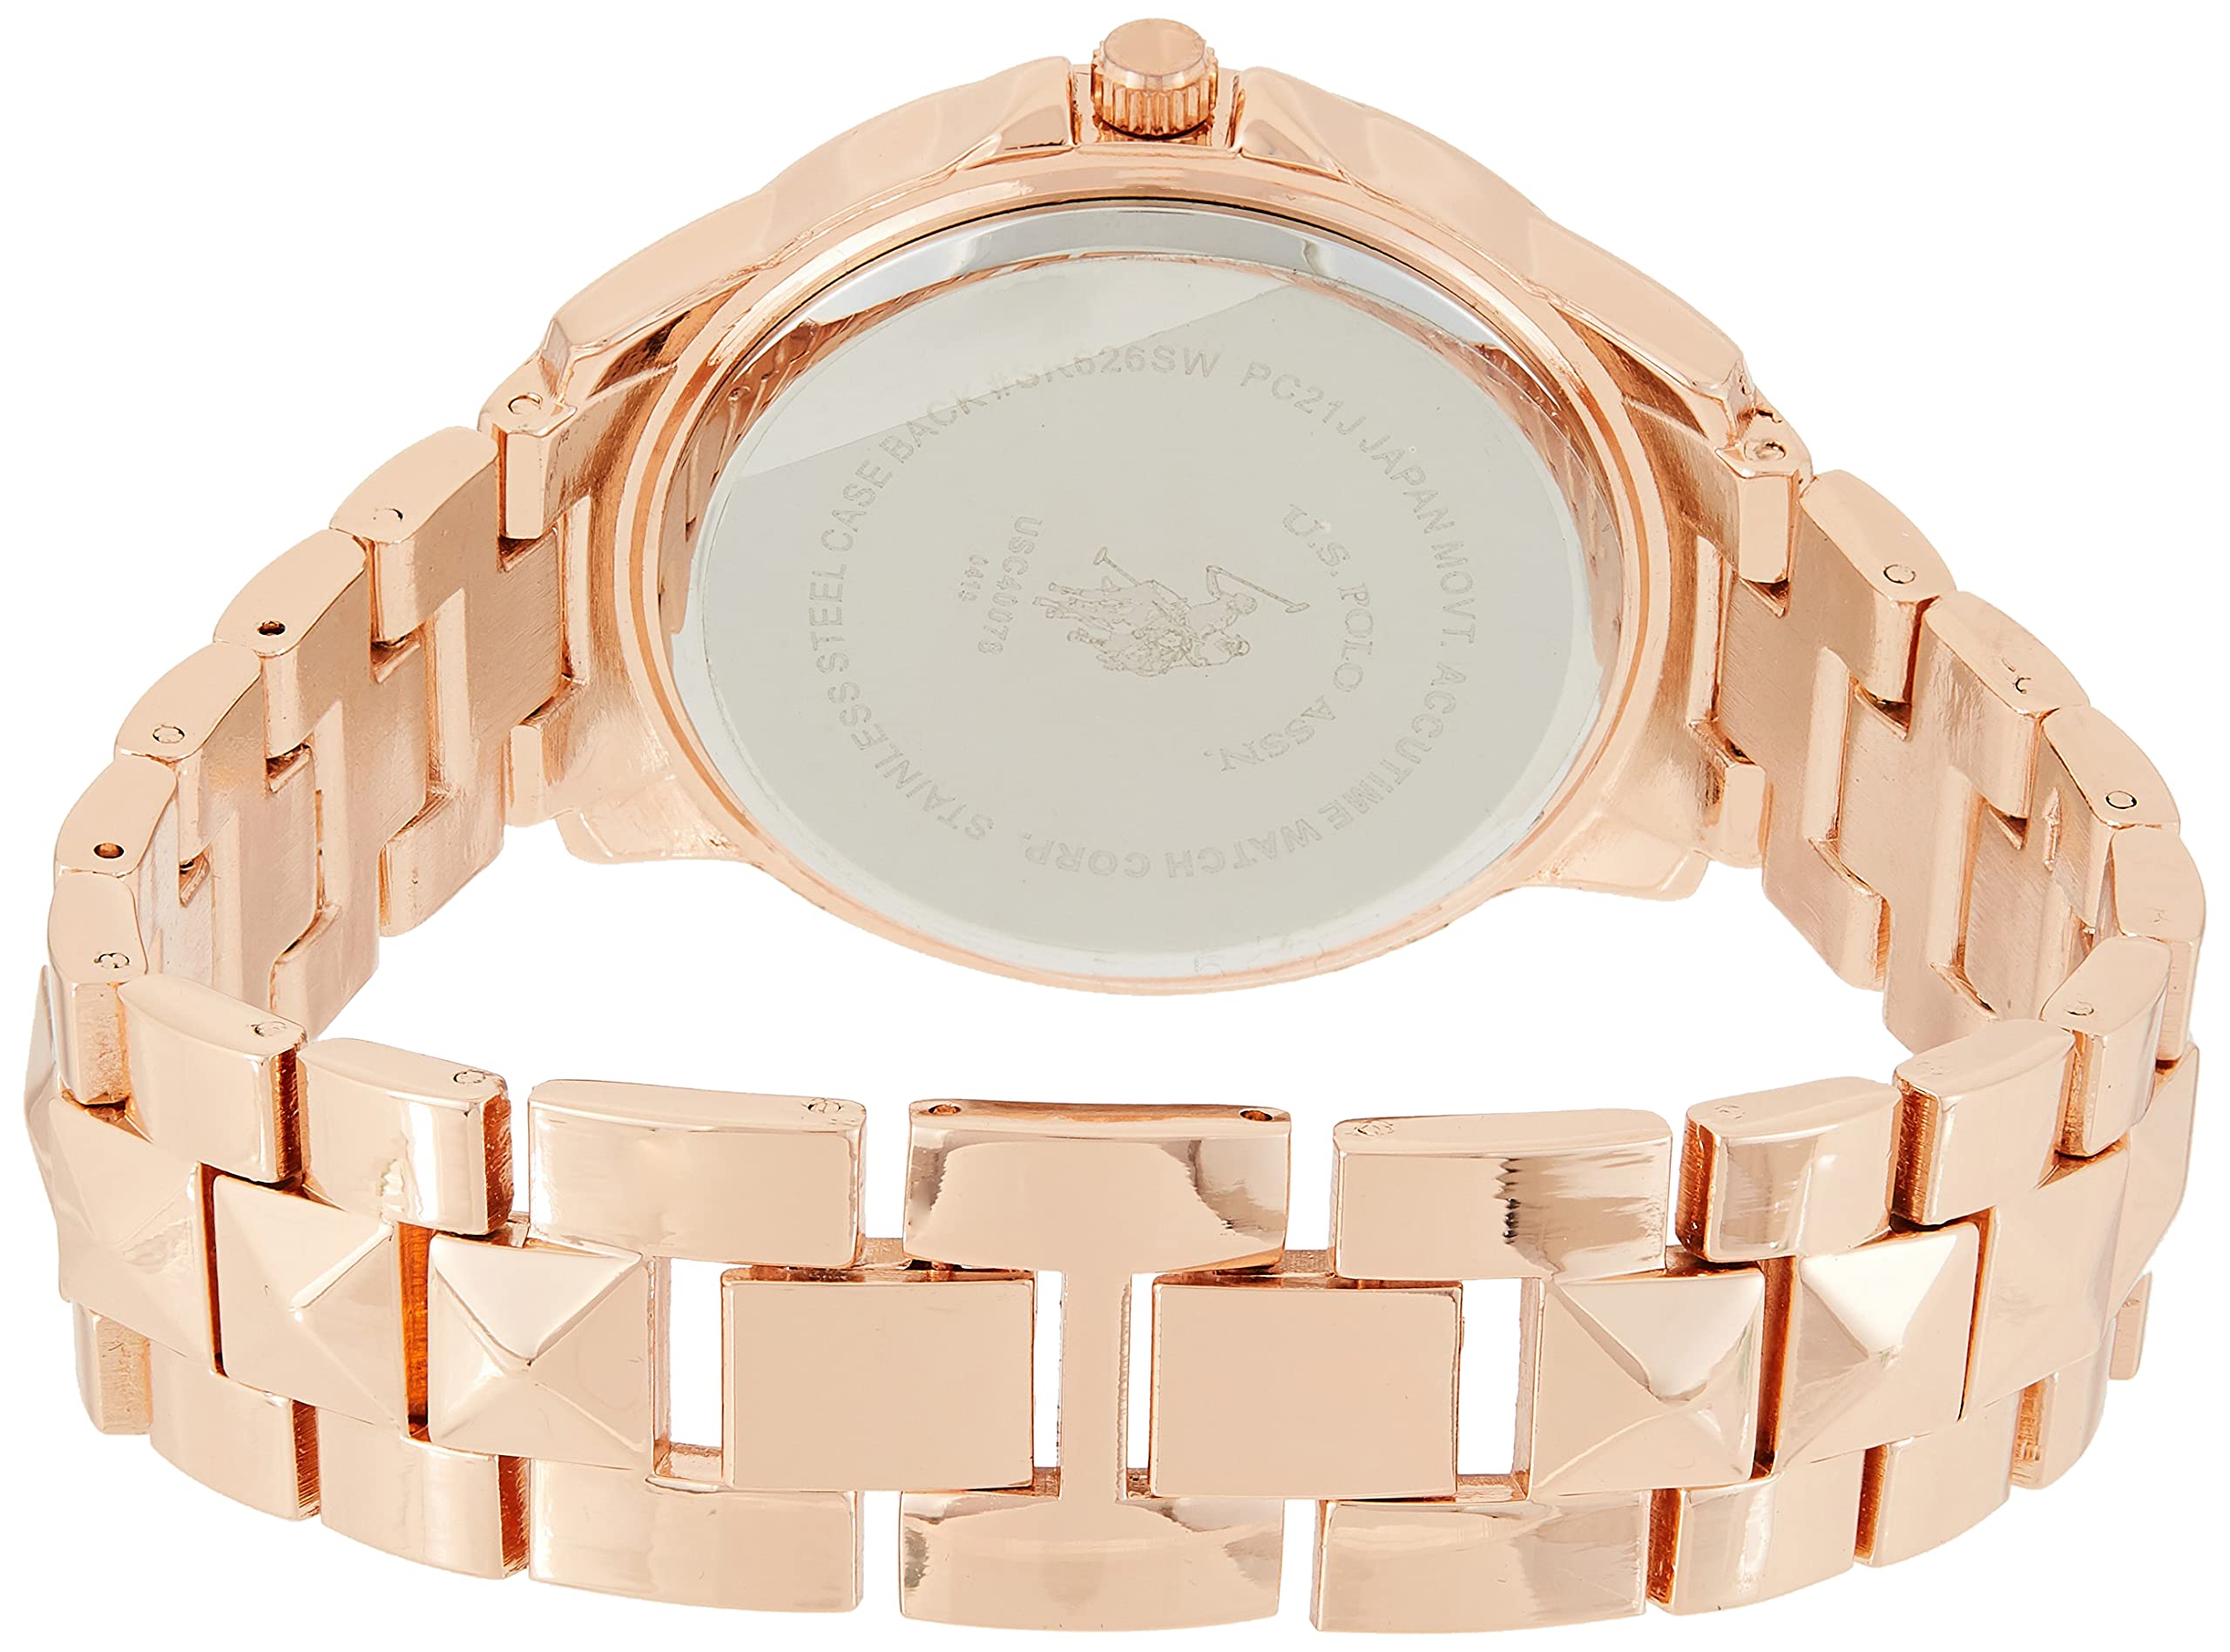 U.S. Polo Assn. Women's Watch with Crystal Studded Bezel, Alloy Bracelet Strap with Jewelry Clasp